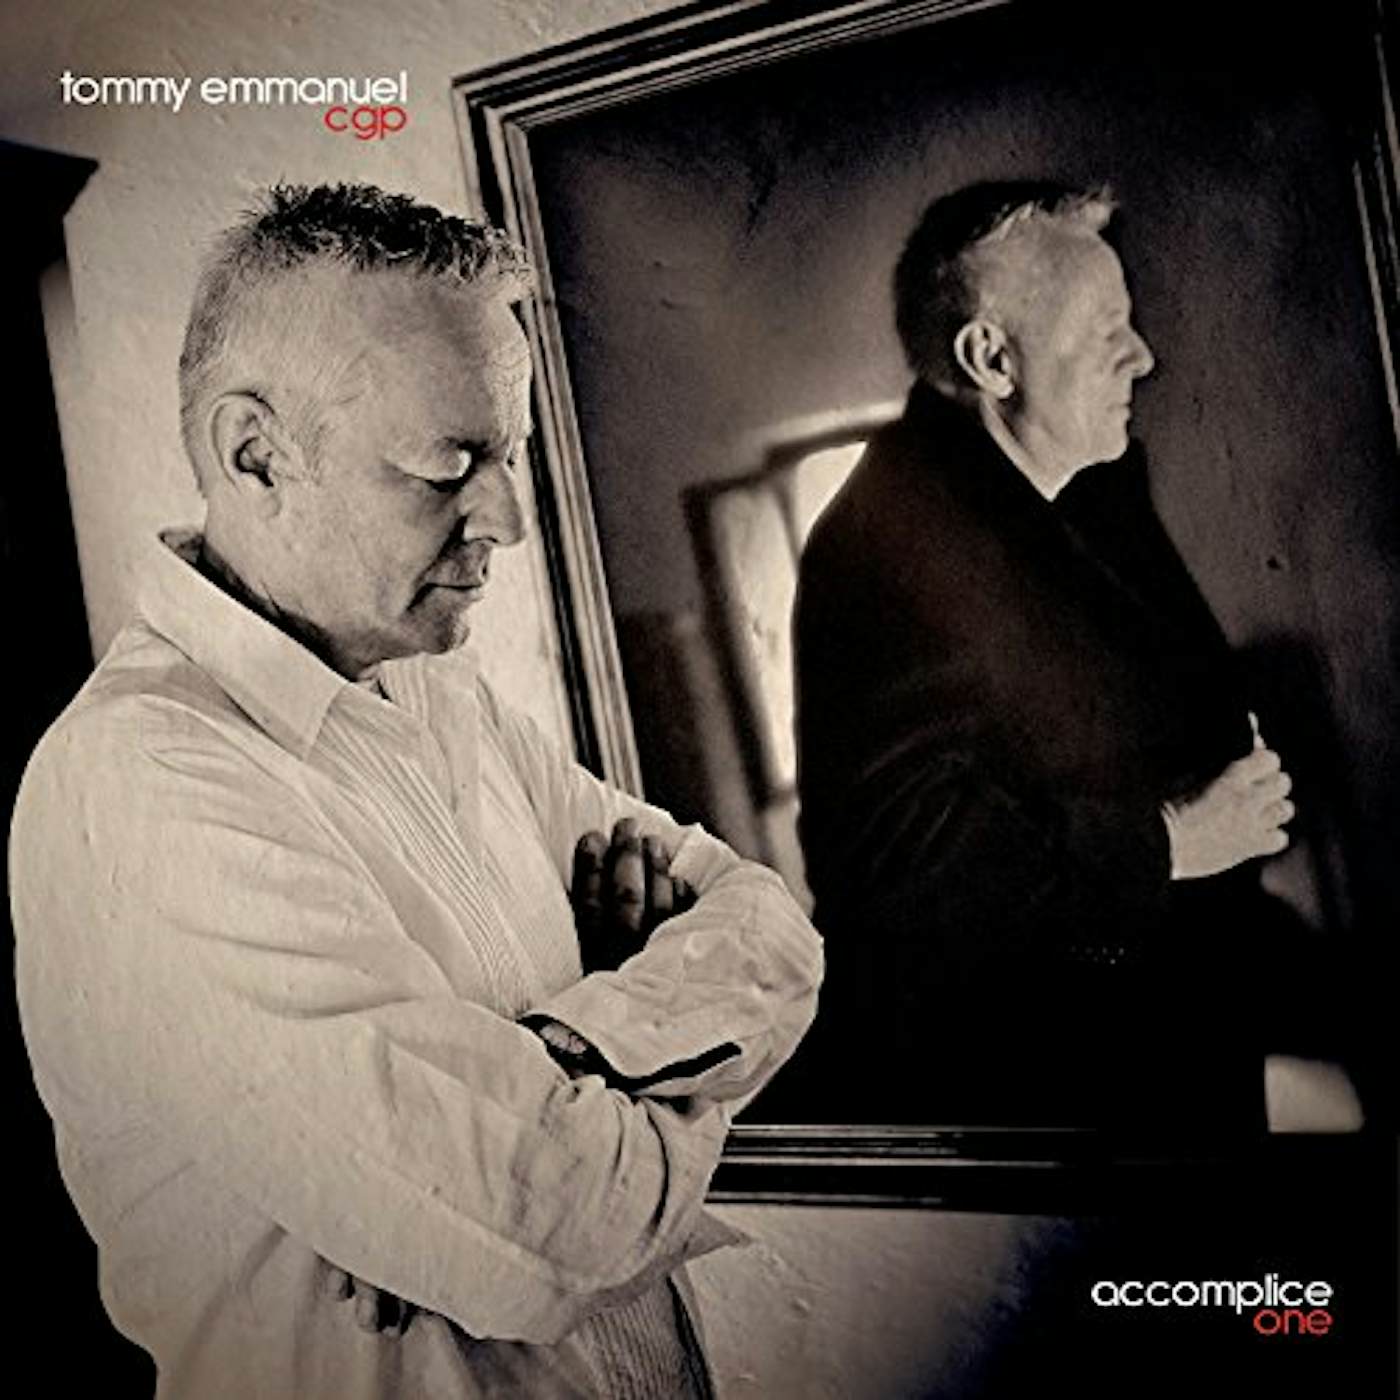 Tommy Emmanuel Accomplice One Vinyl Record